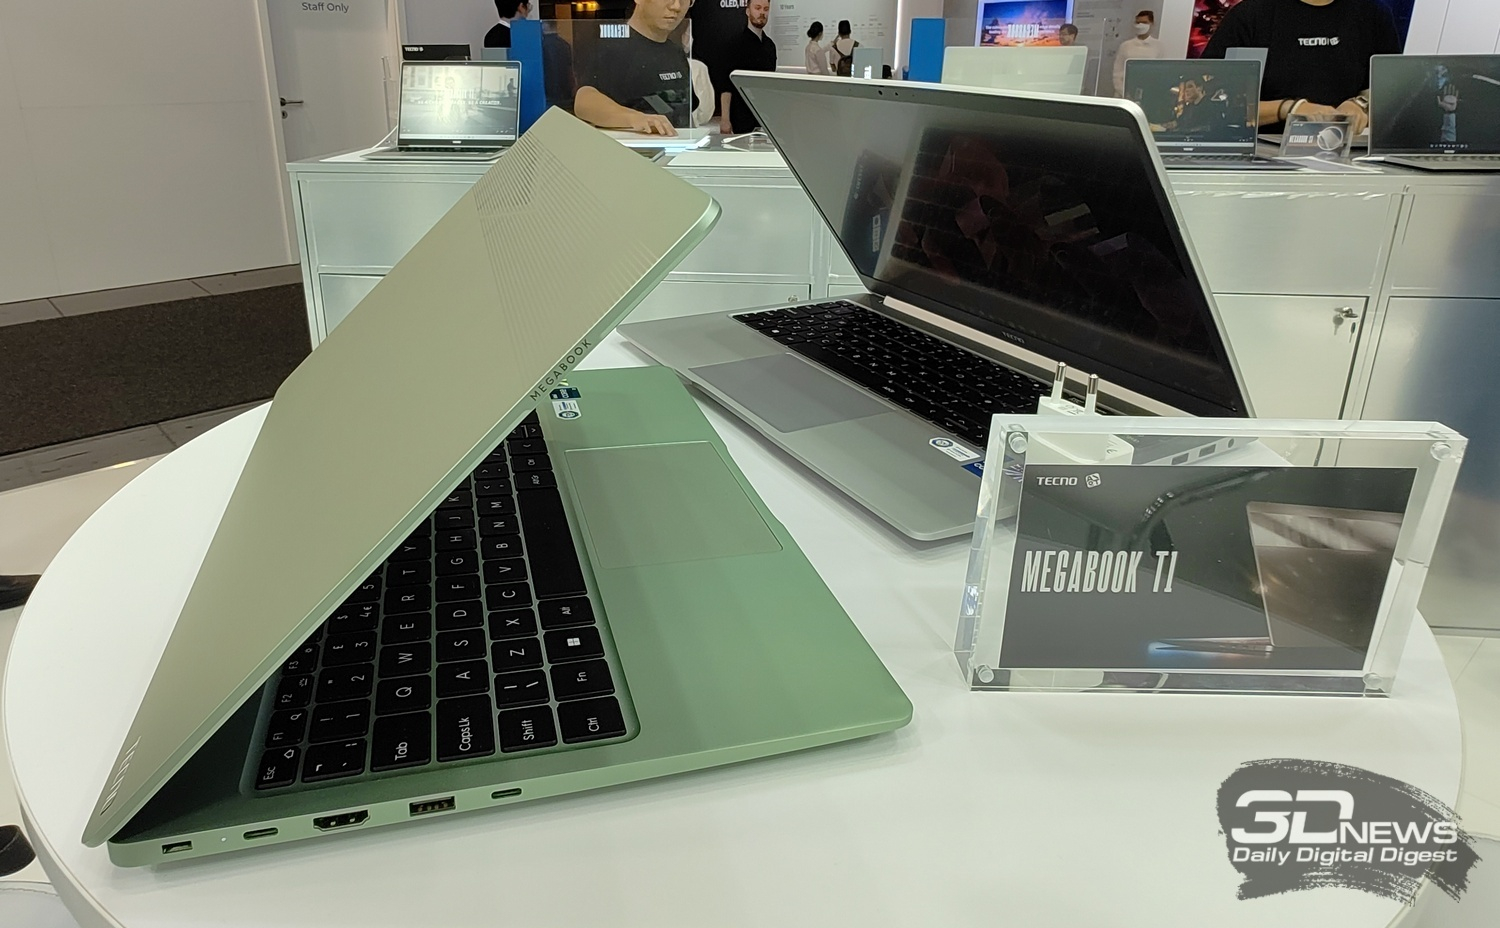 Ноутбук tecno t1 i5. Ноутбук Tecno MEGABOOK t1 зеленый. Techno MEGABOOK t1. Ноутбук Техно Мегабук. 15.6" Ноутбук Tecno MEGABOOK t1 зеленый.